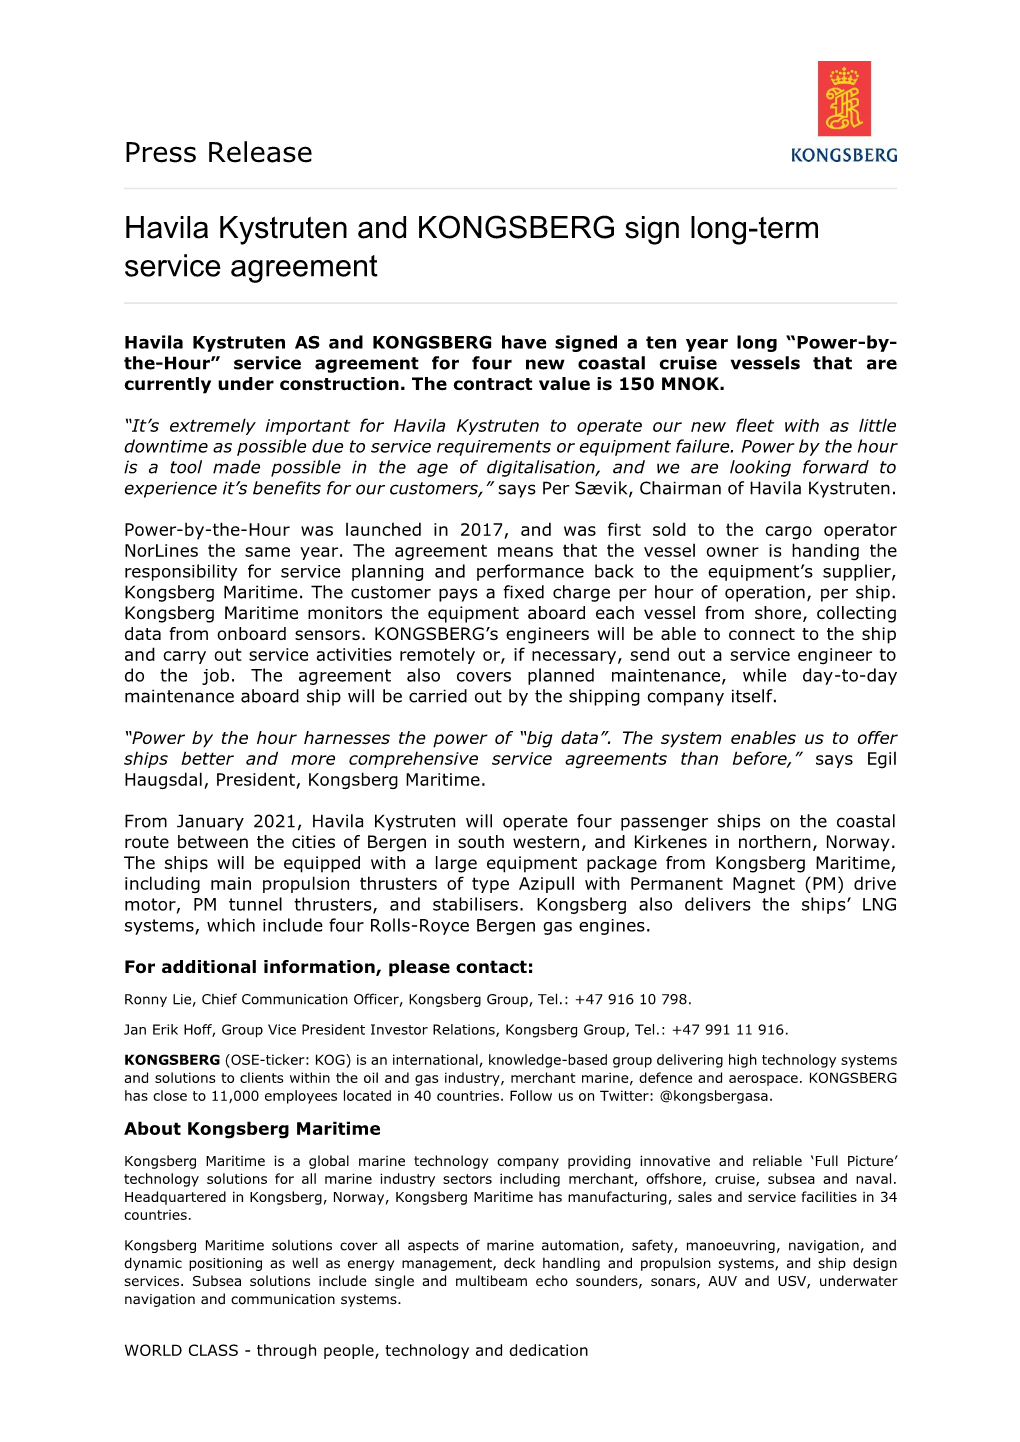 Havila Kystruten and KONGSBERG Sign Long-Term Service Agreement